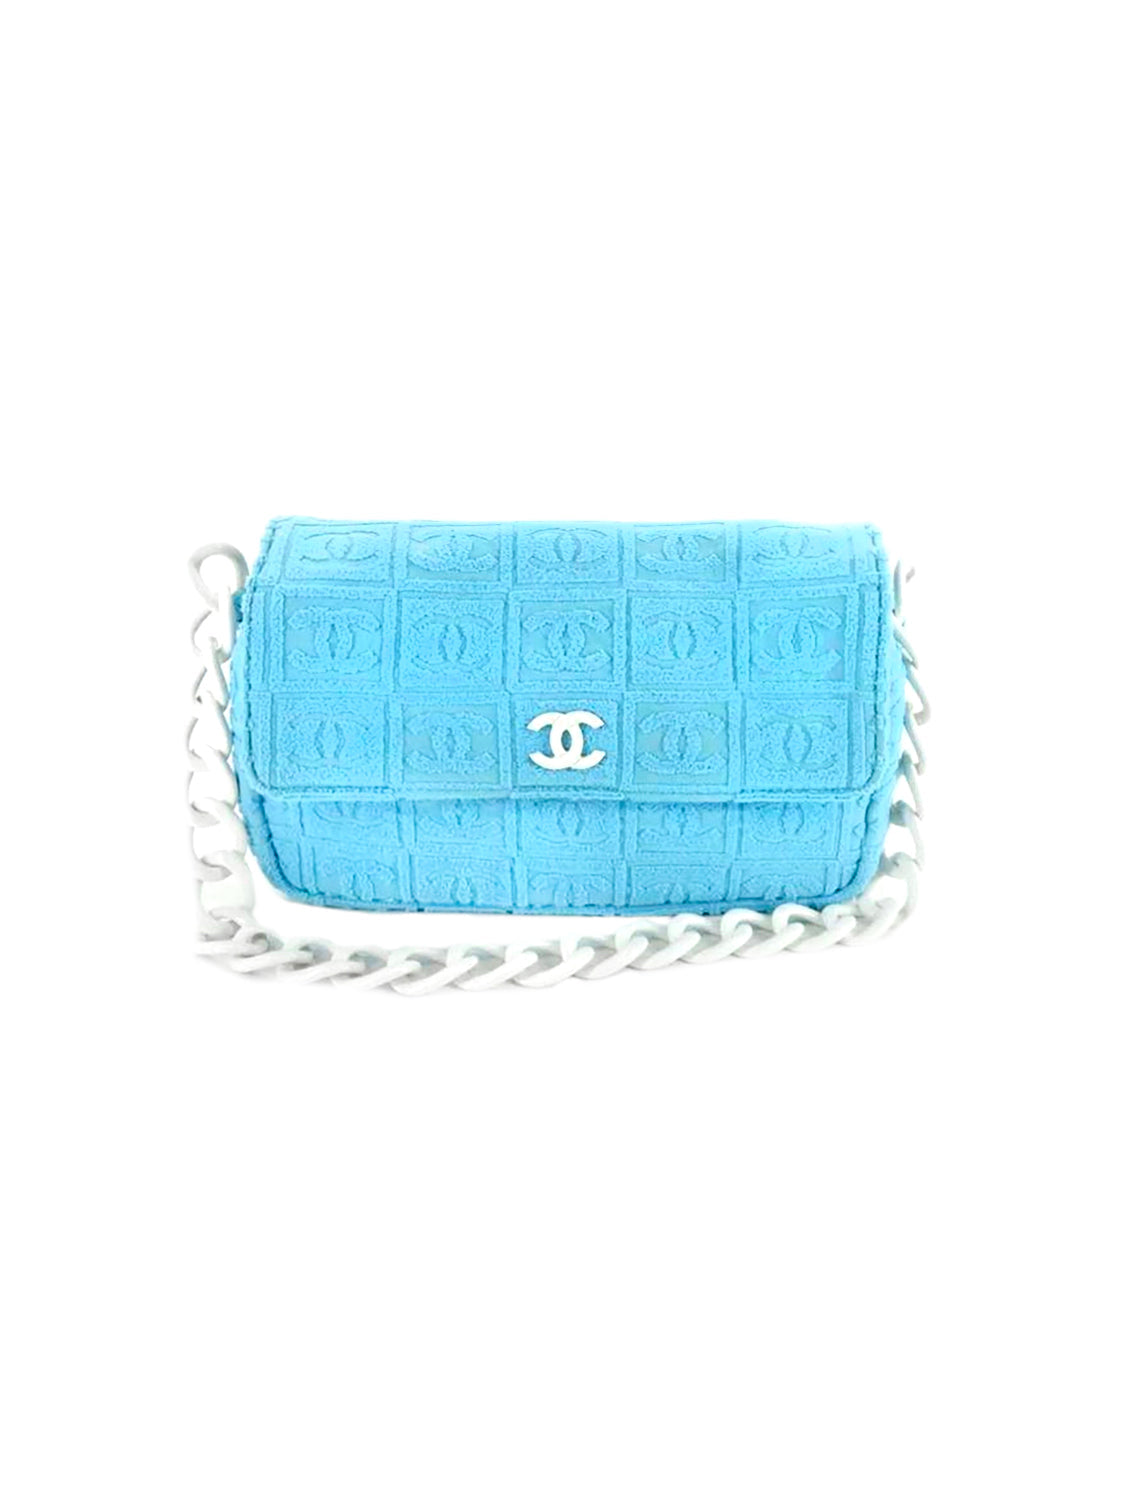 Chanel Sports Rare Blue Terrycloth Monogram Flap